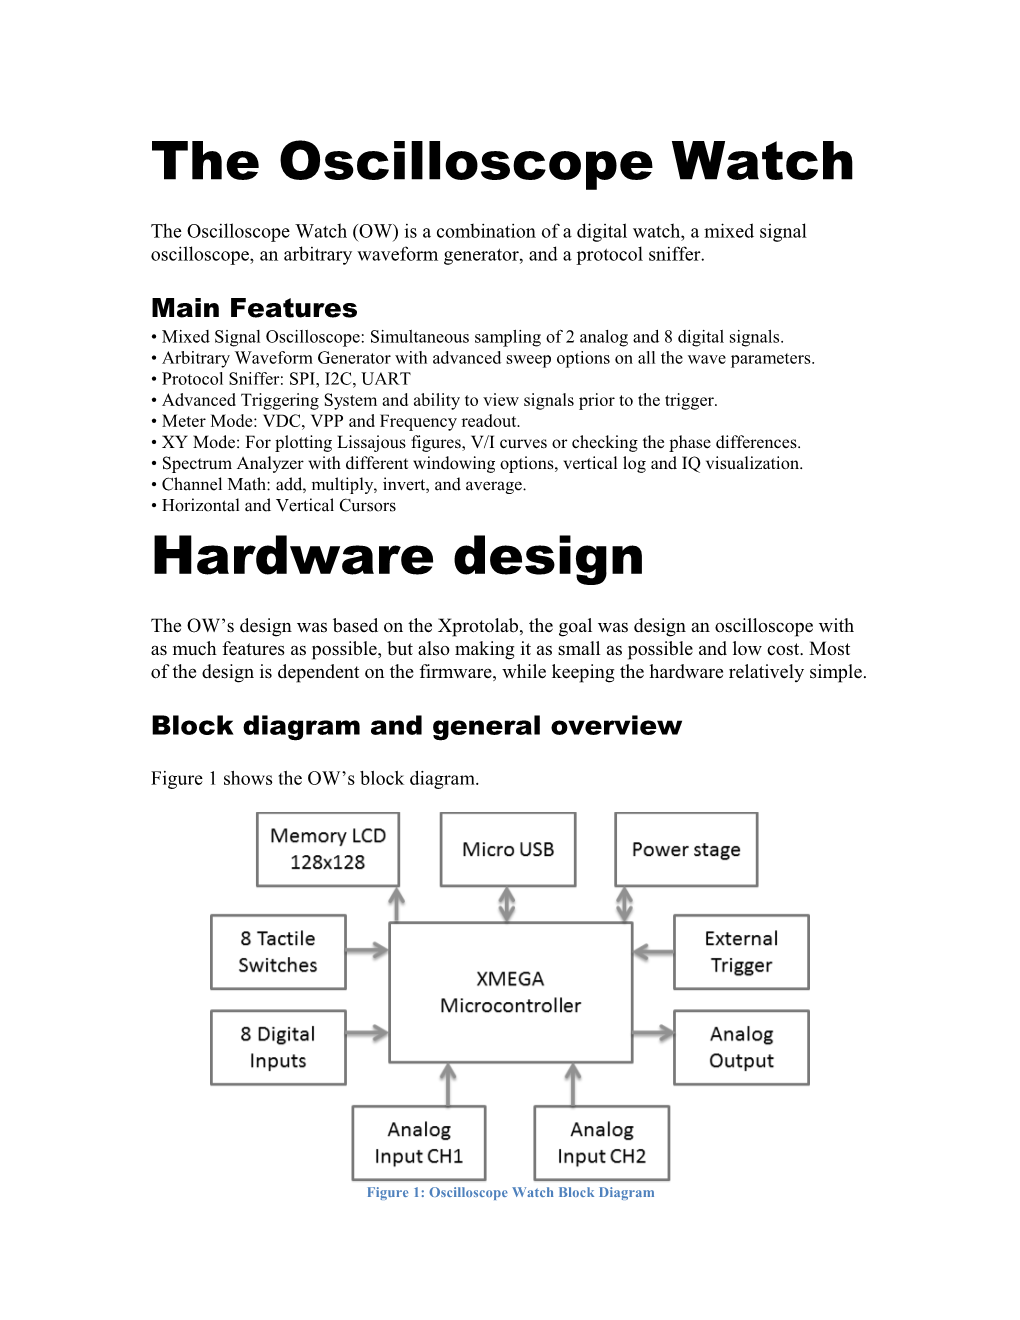 Oscilloscope Watch Teardown